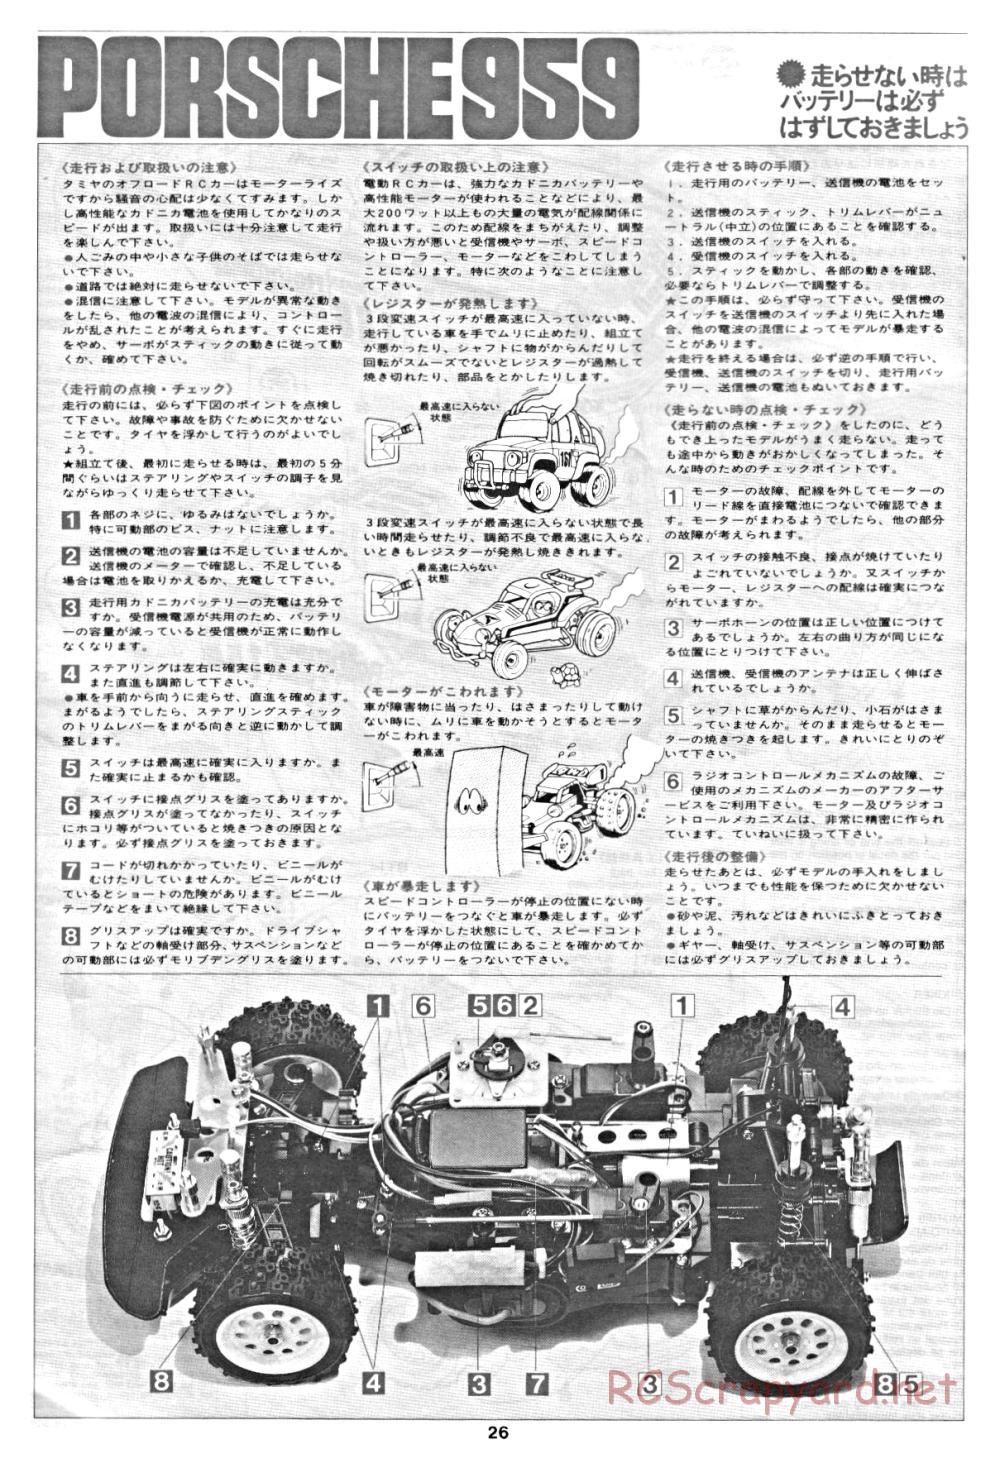 Tamiya - Porsche 959 - 58059 - Manual - Page 26